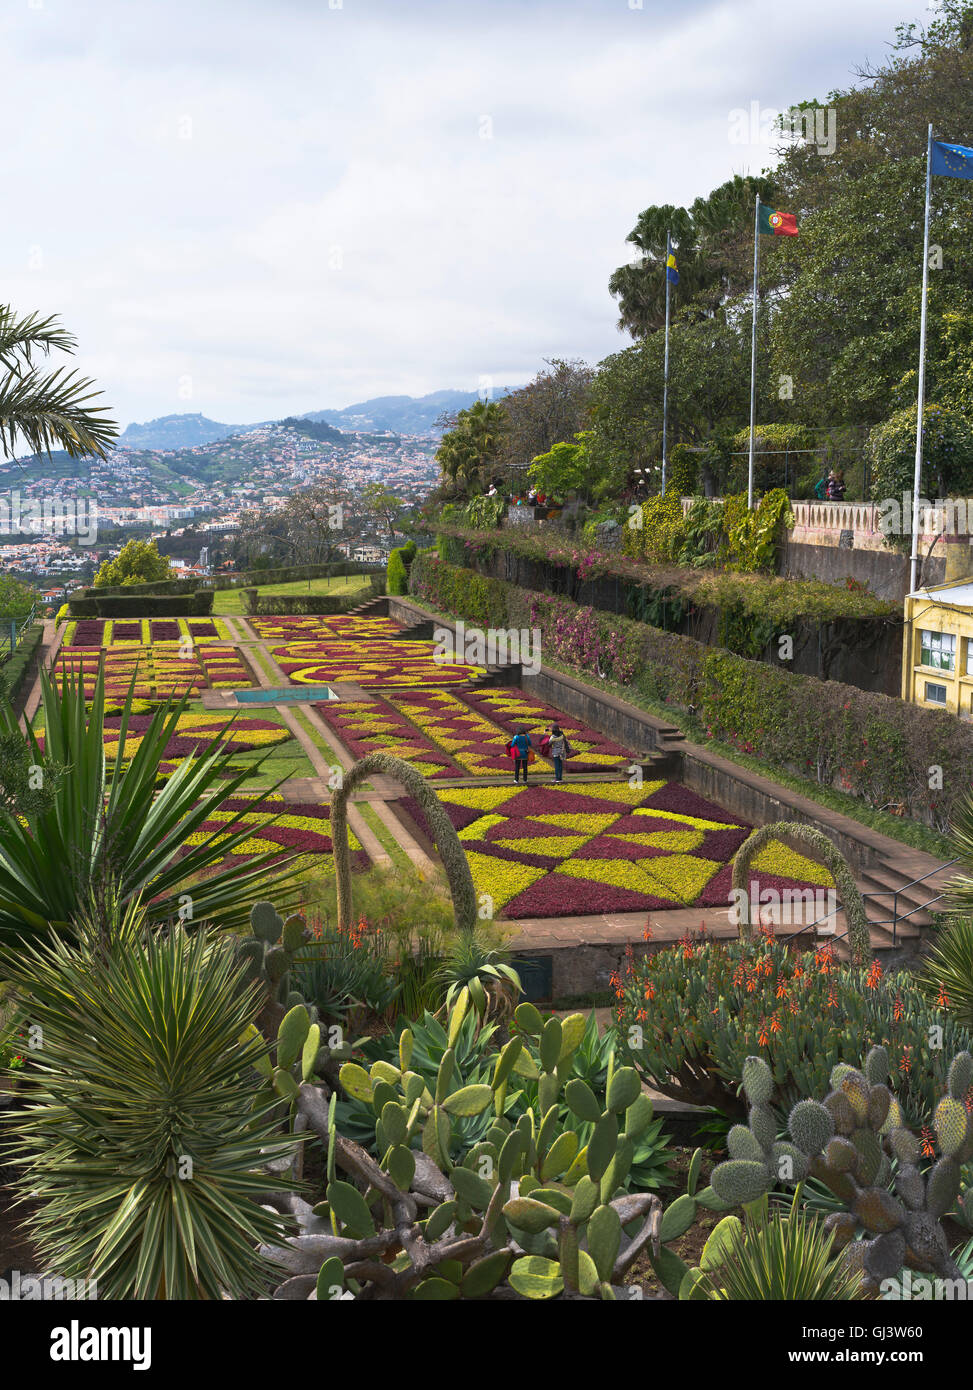 Dh Botanical Gardens Funchal Madeira touristes affichage mosaïque végétale haie jardin terrasse chambres Banque D'Images